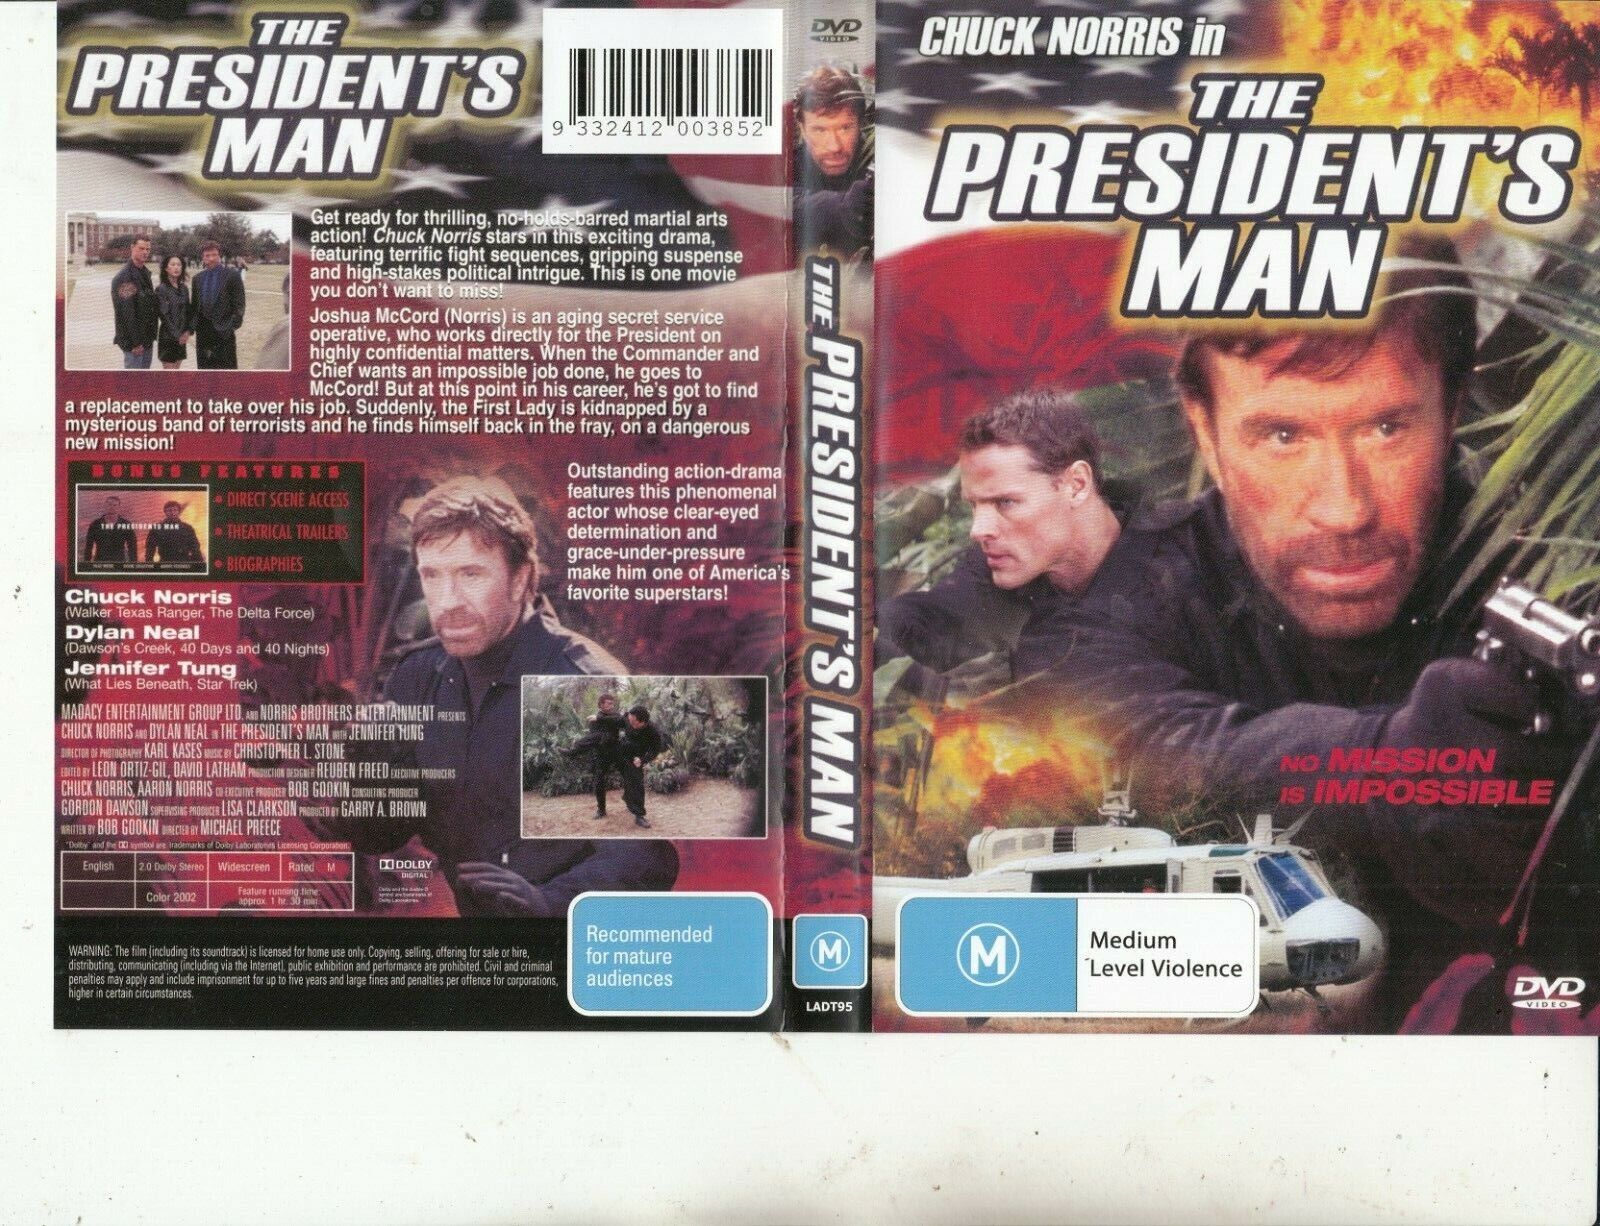 Chuck Norris Collectie DvD DvD 20 The Presidents man